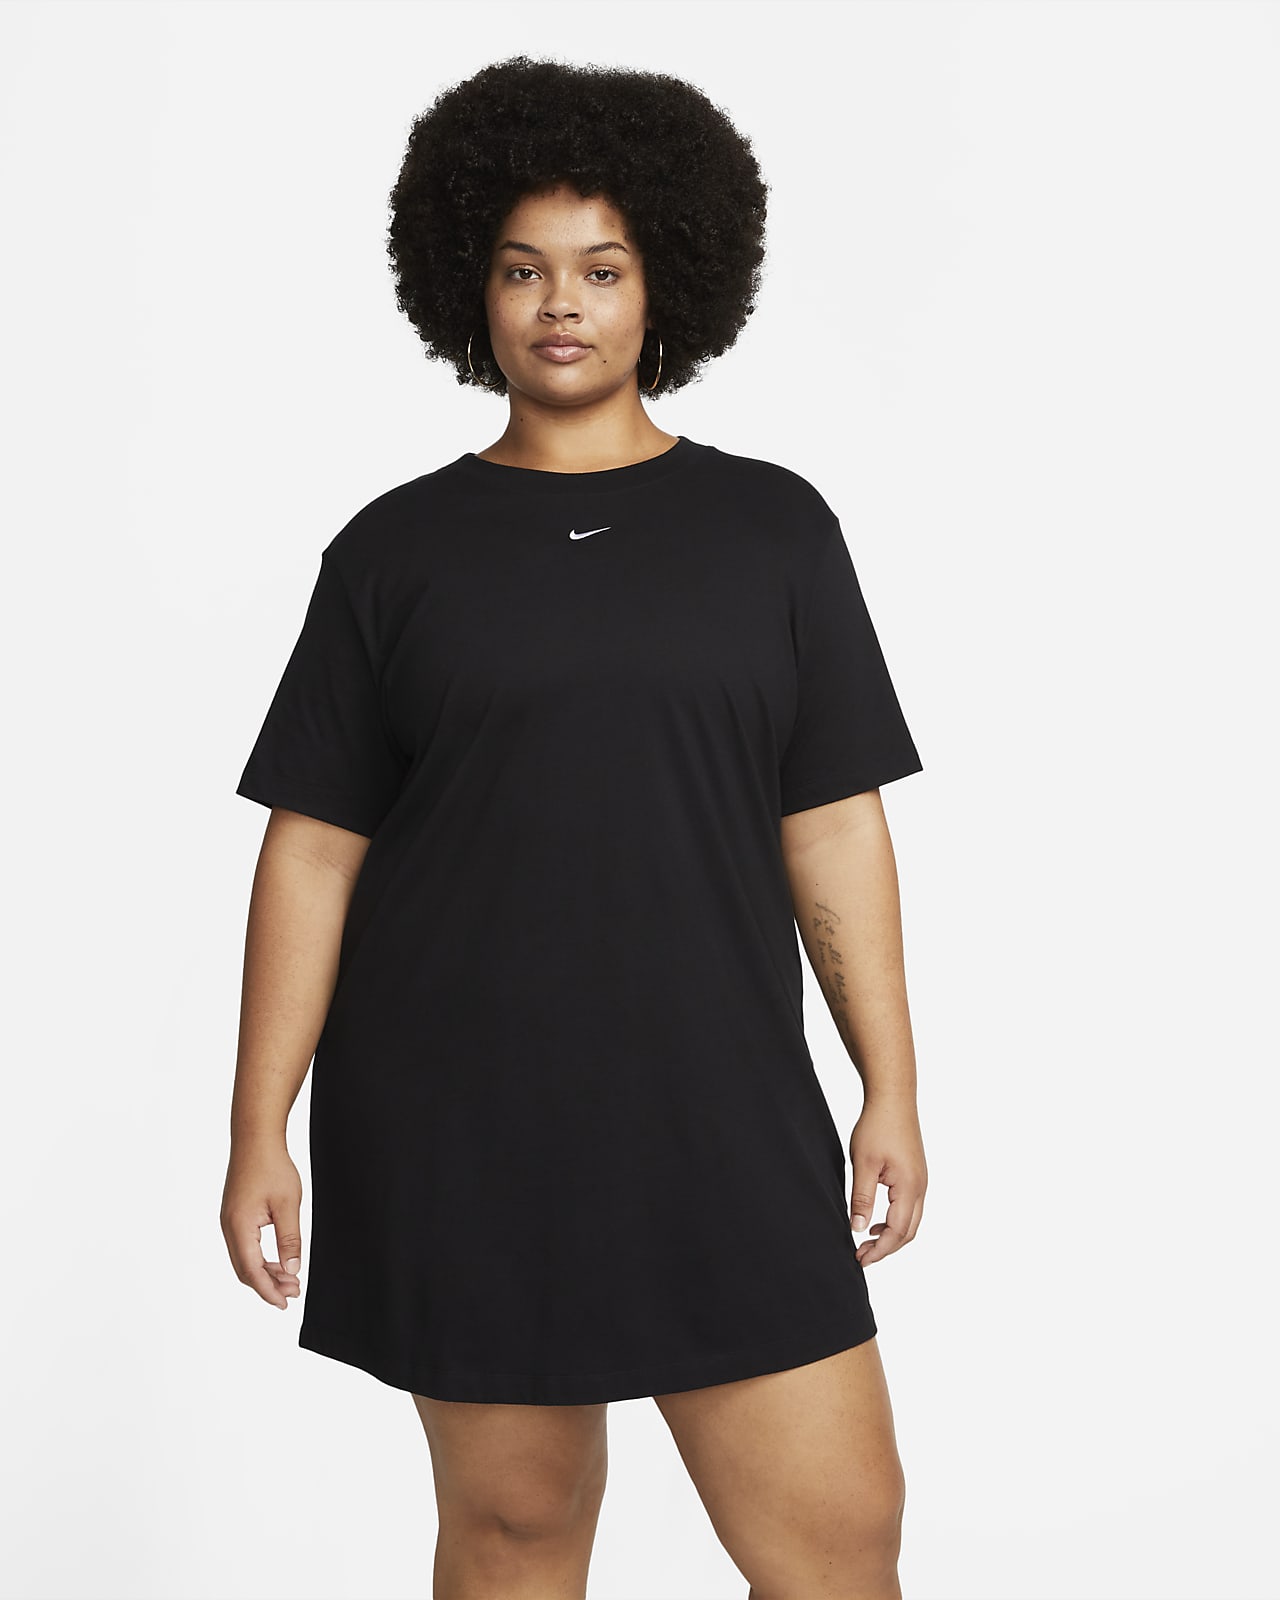 Nike Sportswear Essential rövid ujjú női pólóruha (plus size méret)